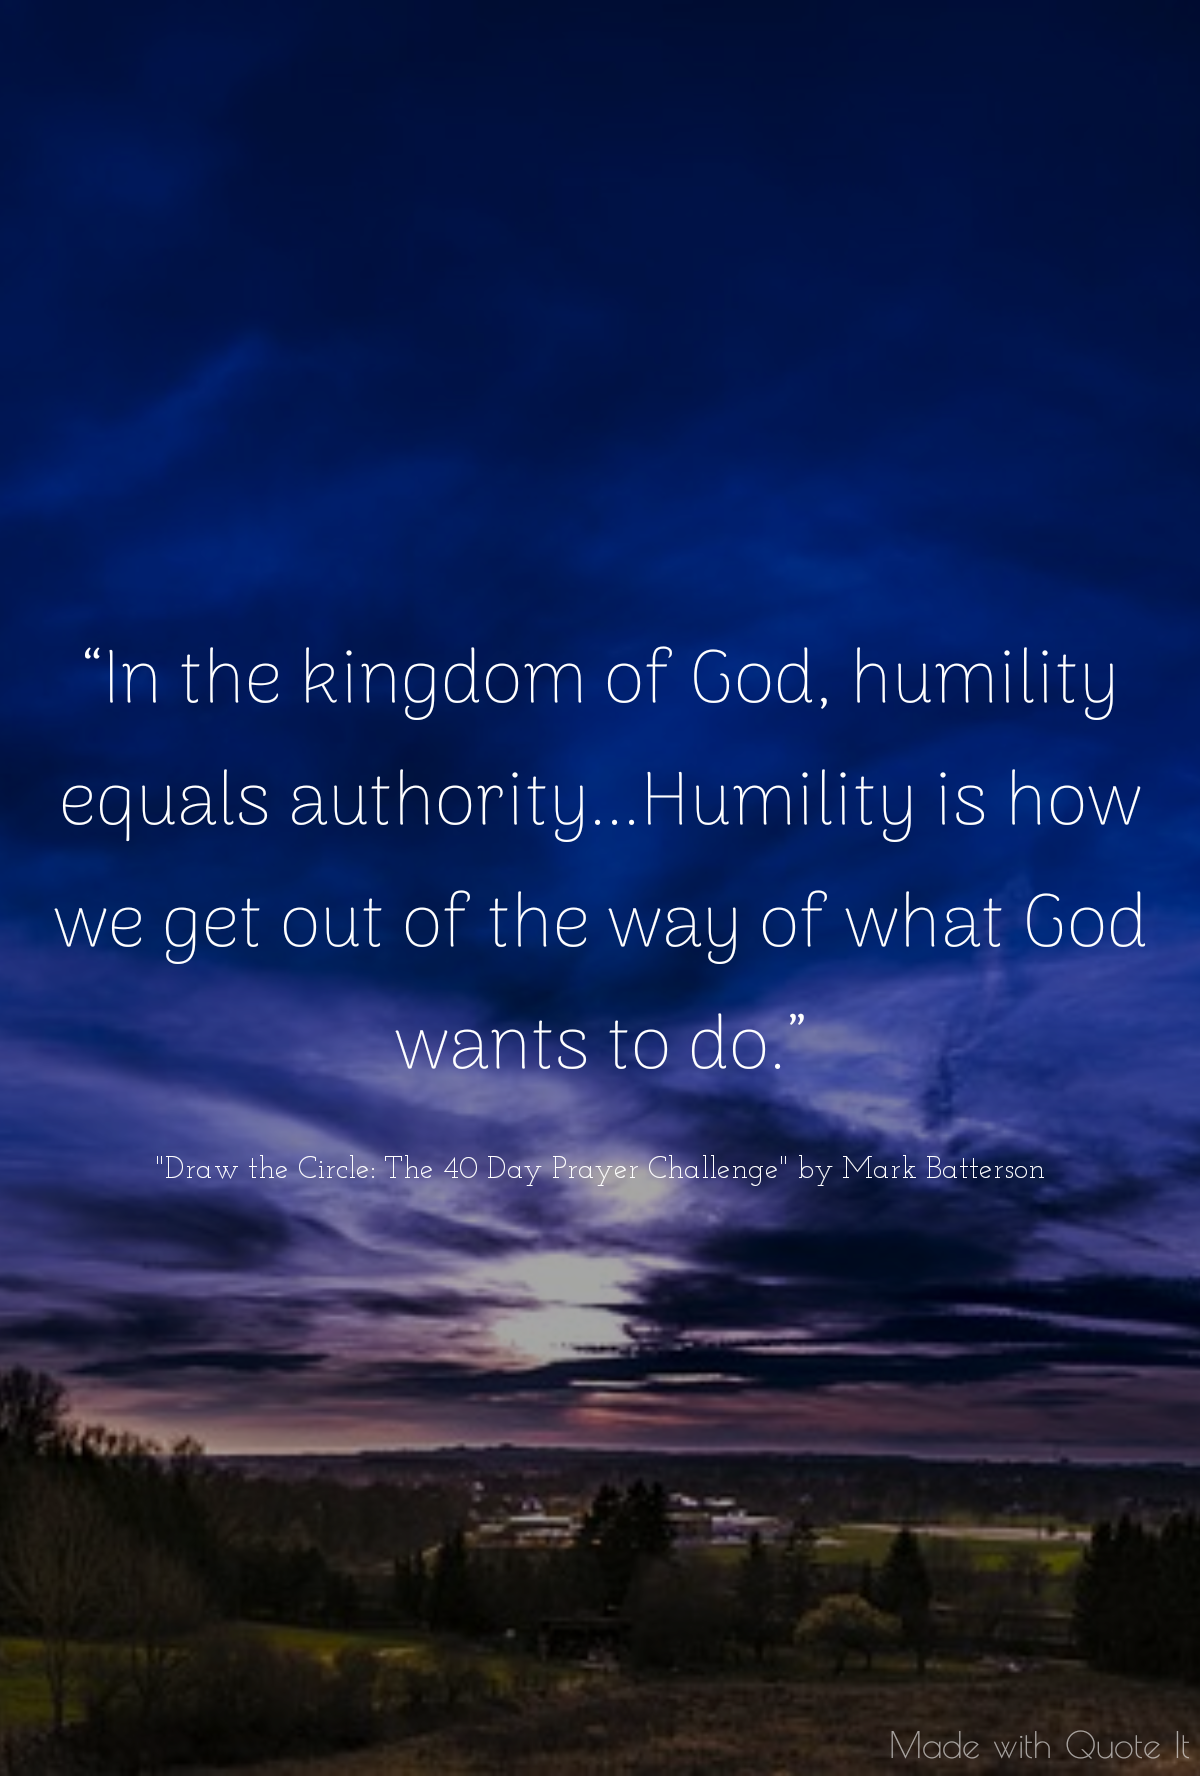 Humility = Authority